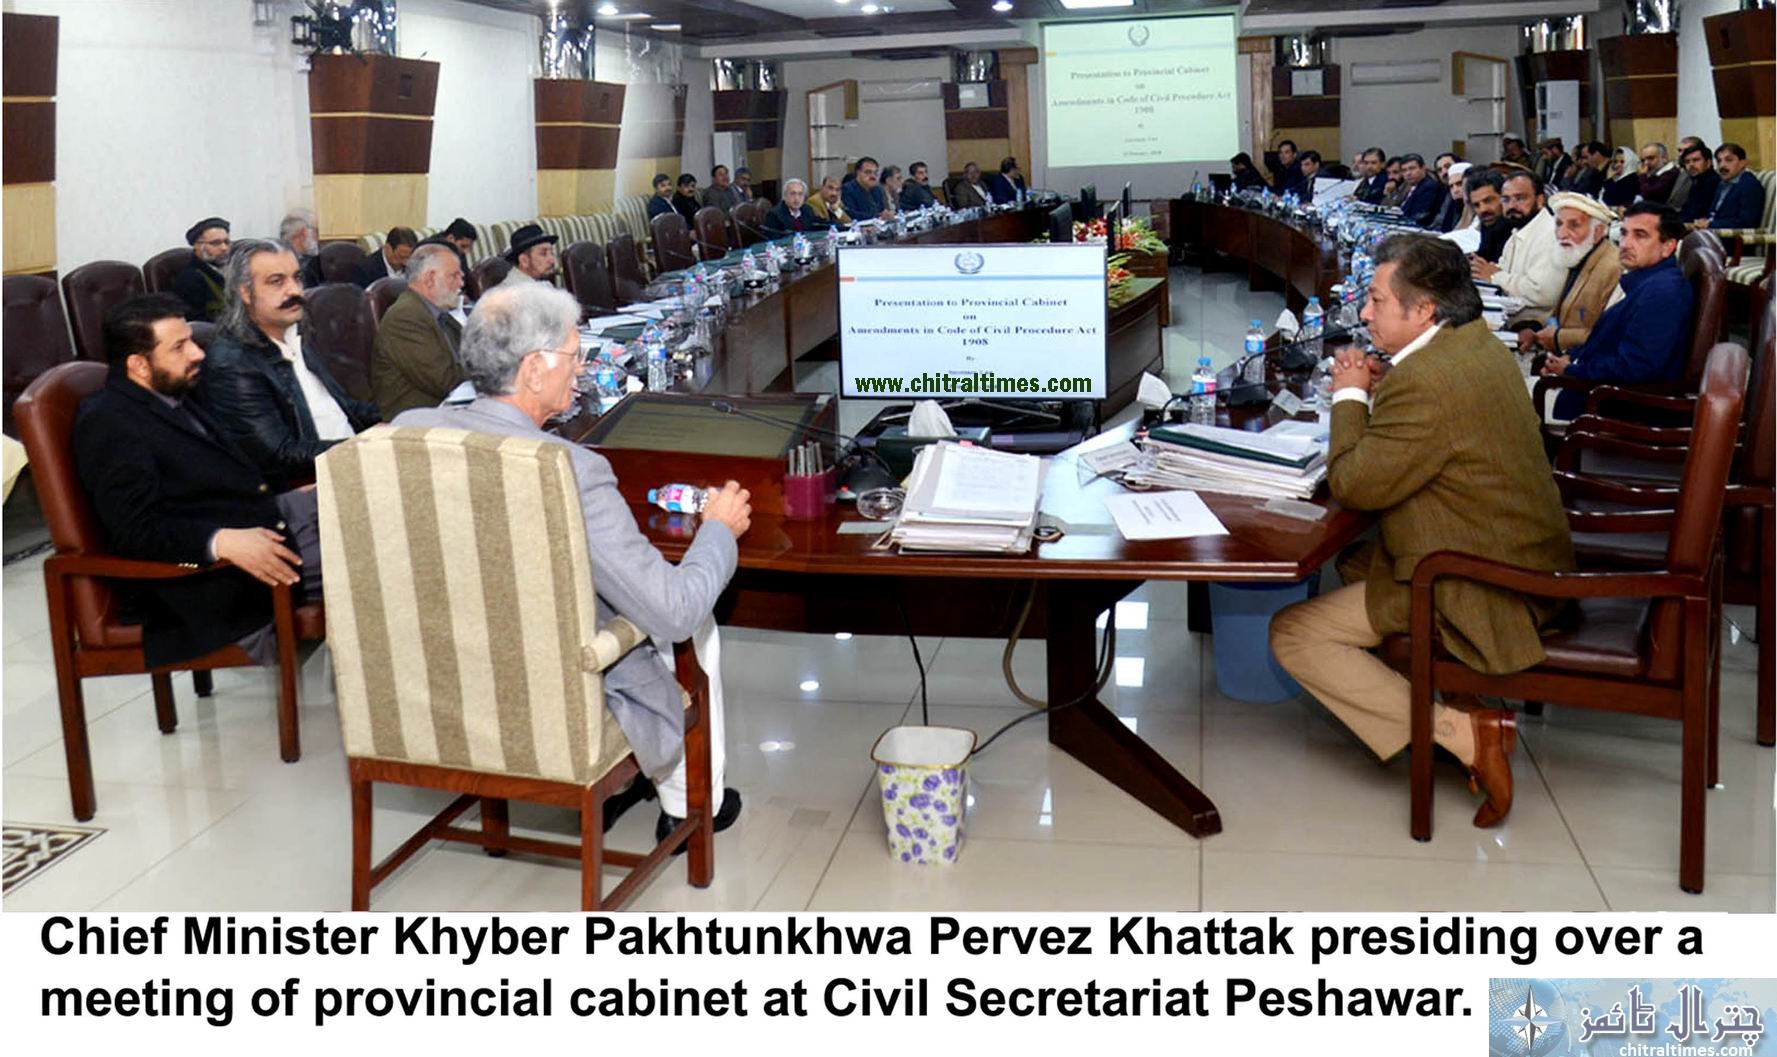 Chief Minister Khyber Pakhtunkhwa Pervez Khattak presiding over a meeting of provincial cabinet at Civil Secretariat Peshawar 2